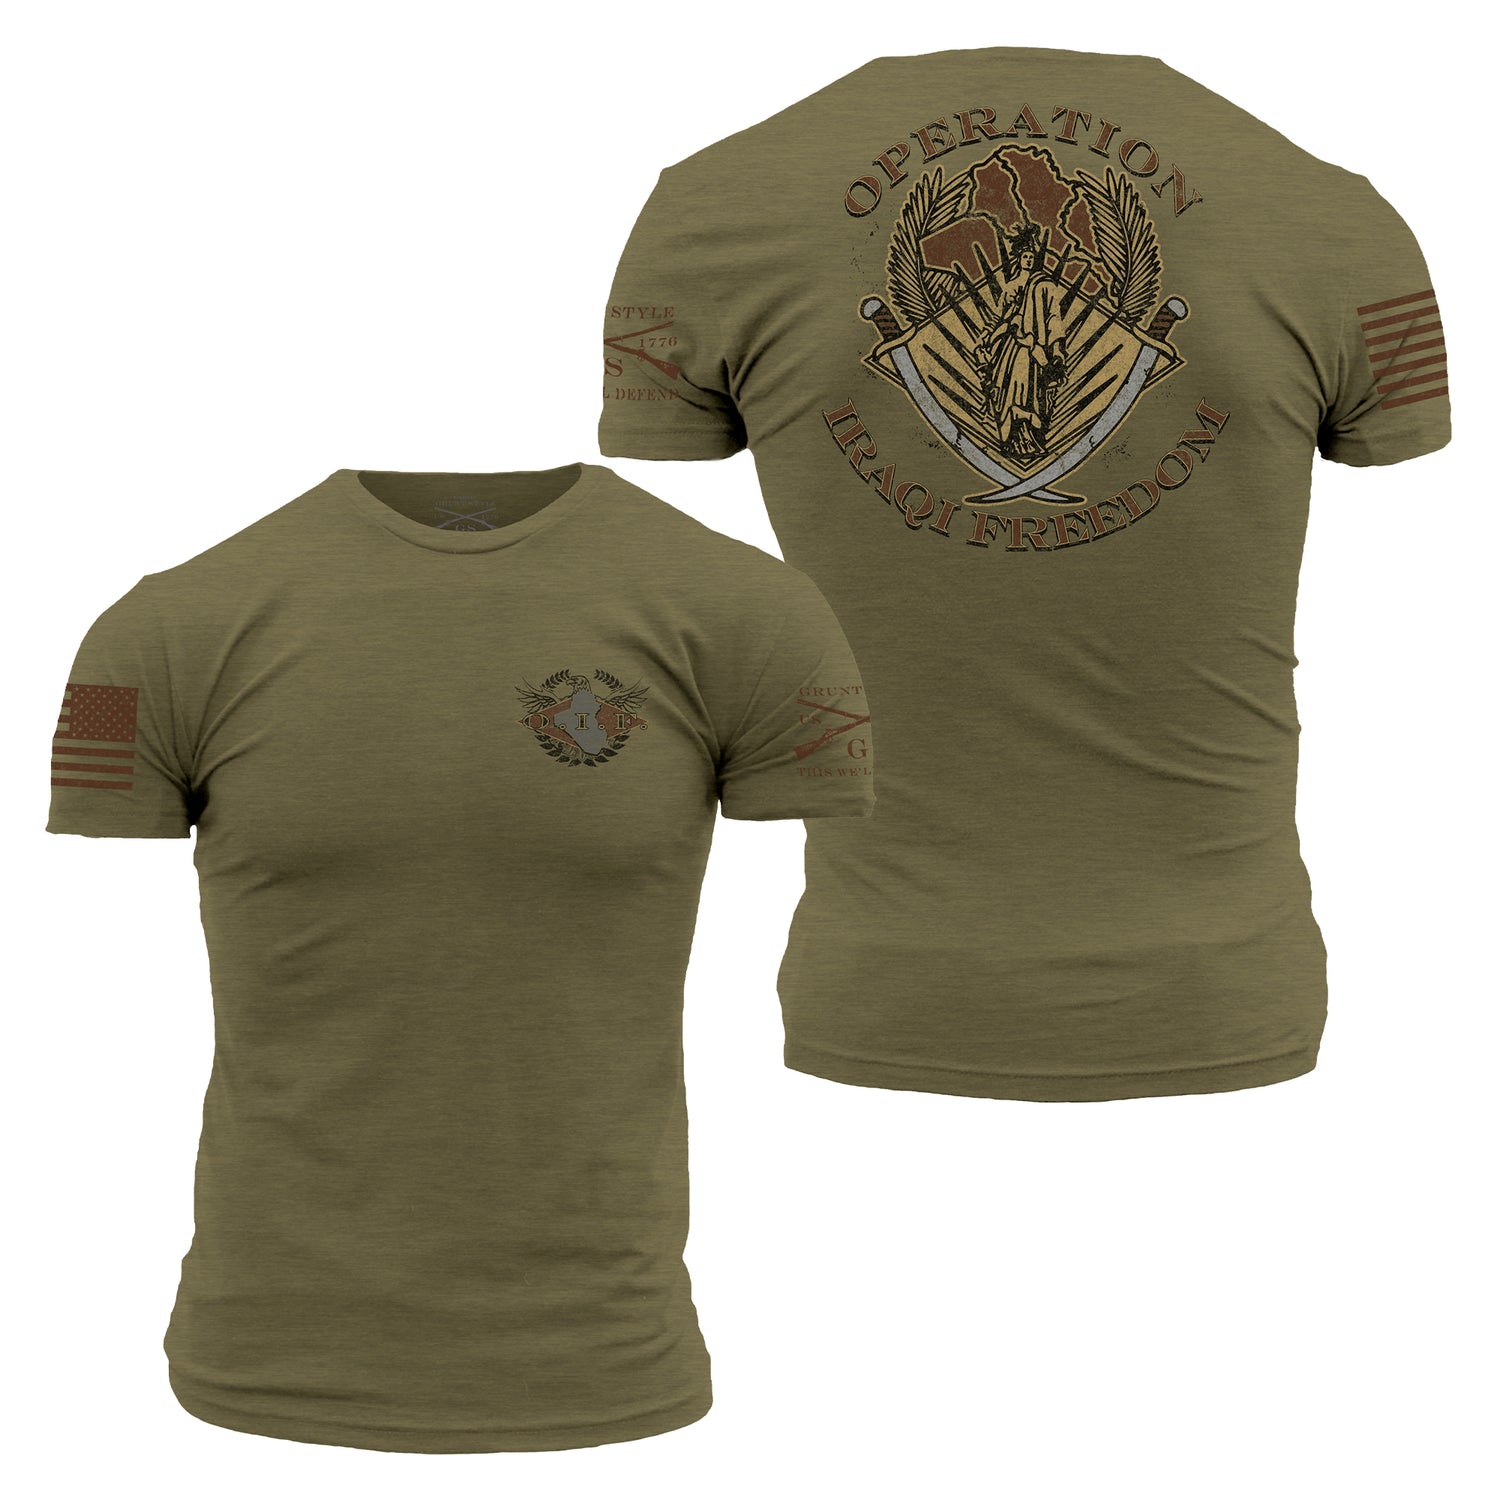 O.I.F. veteran Military Shirts 